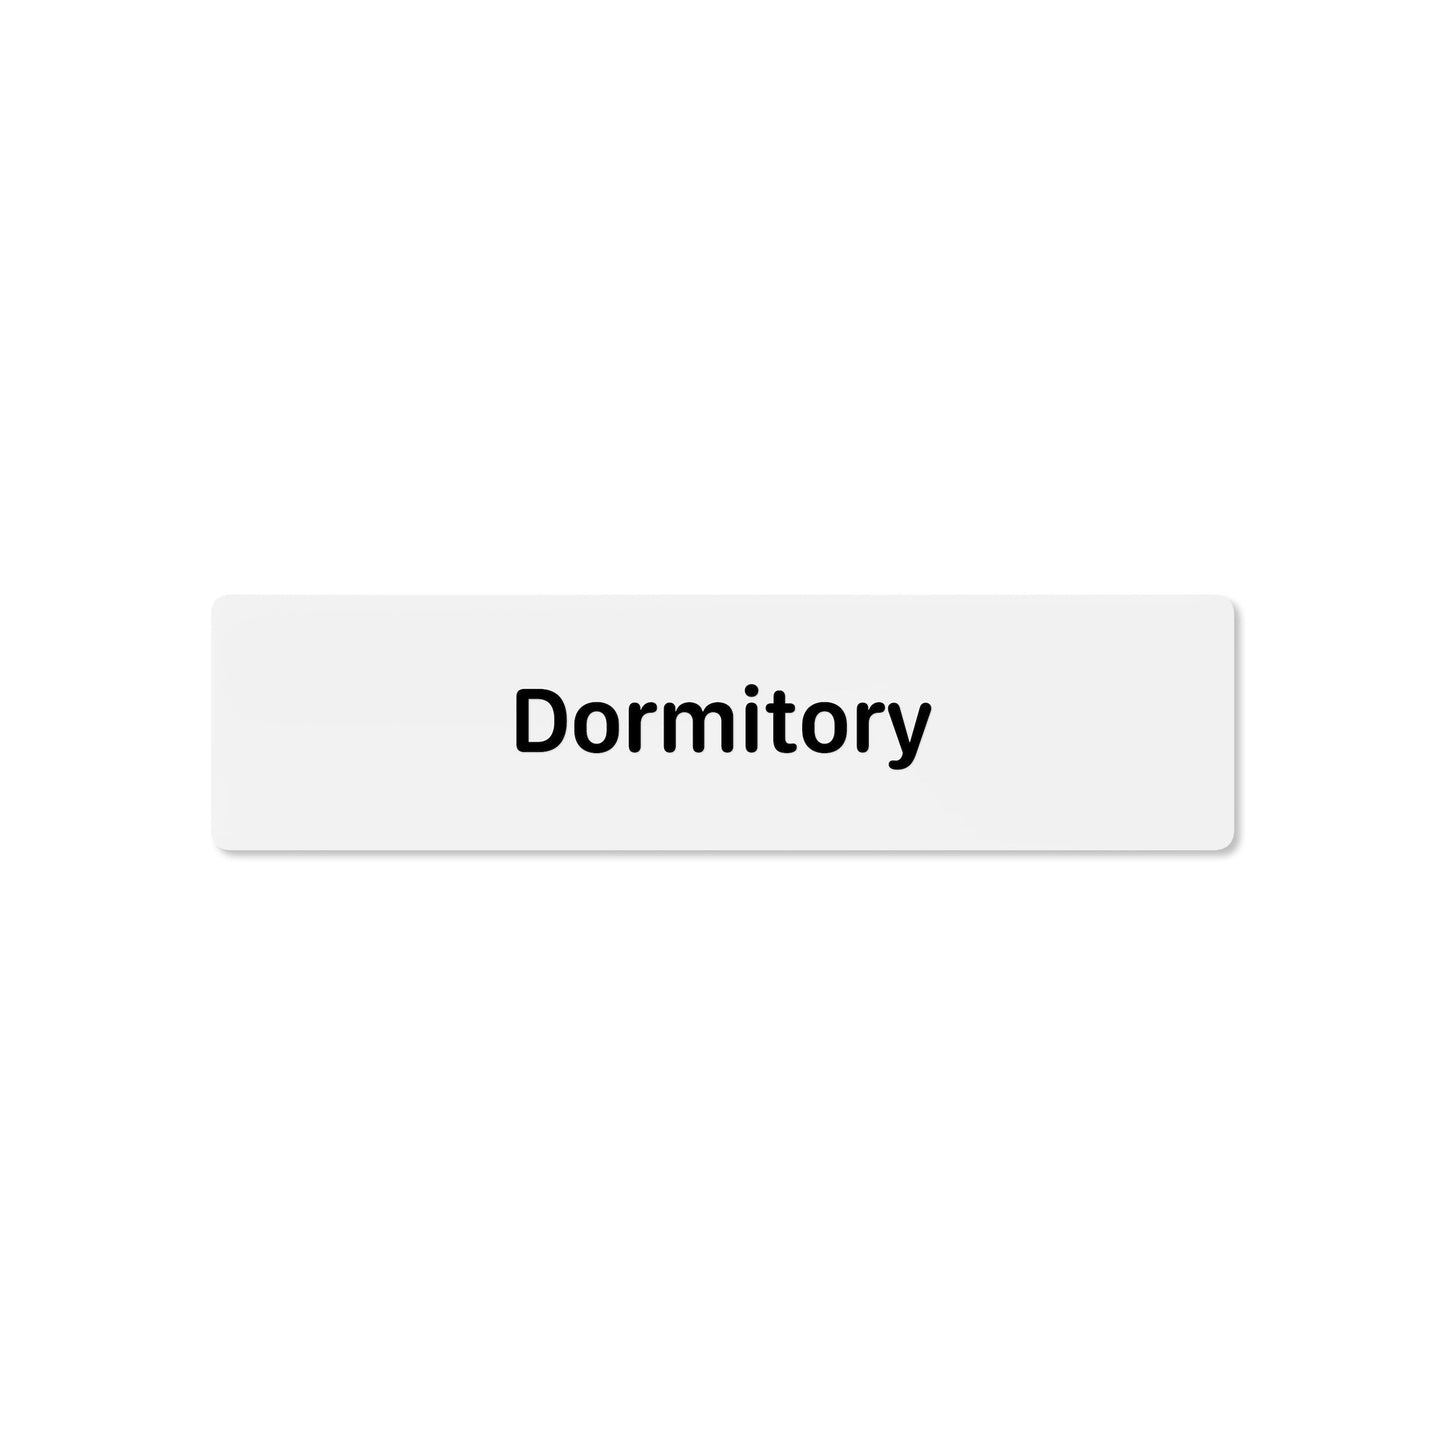 Dormitory